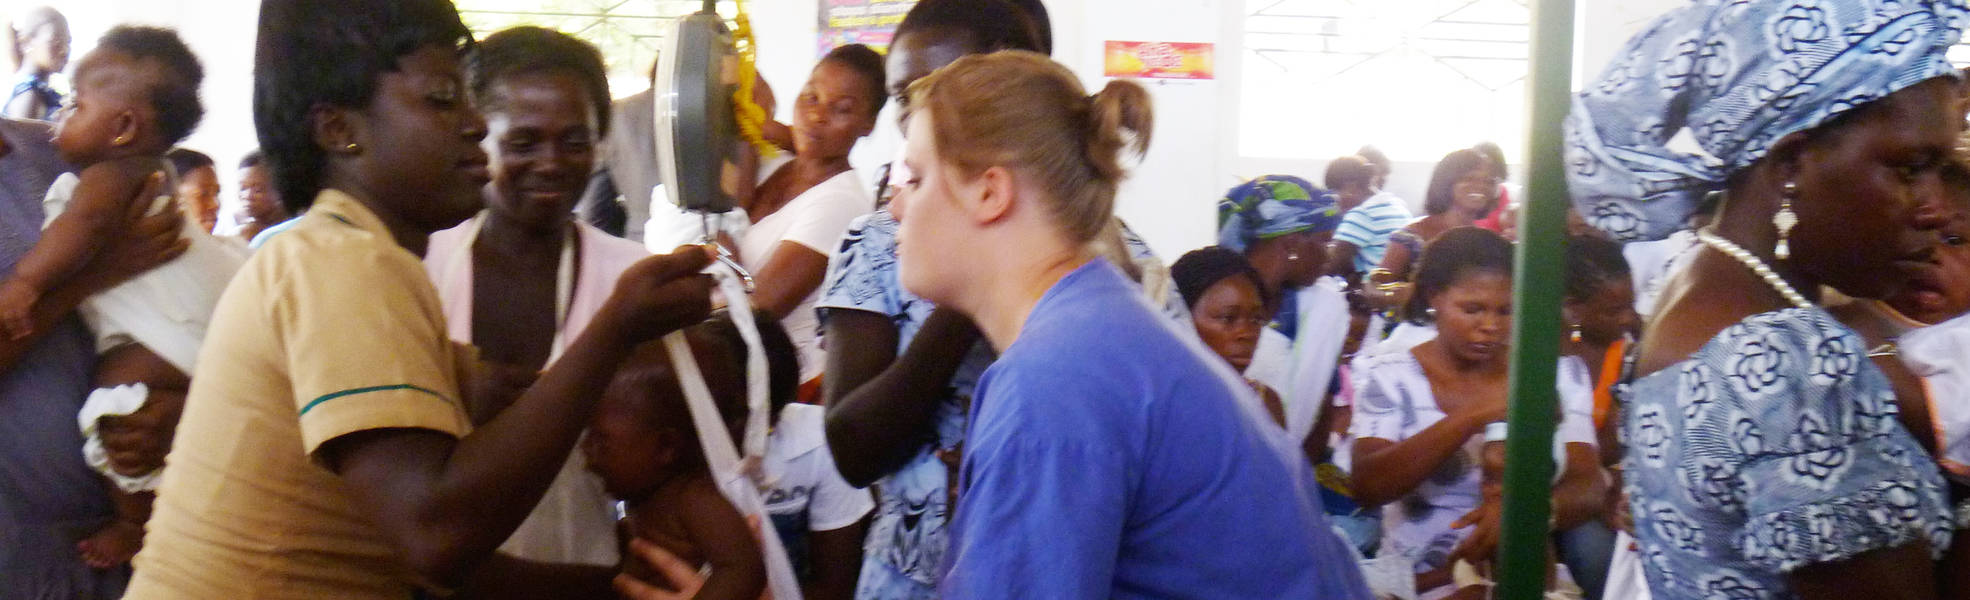 Voluntary work in obstetrics in Tanzania